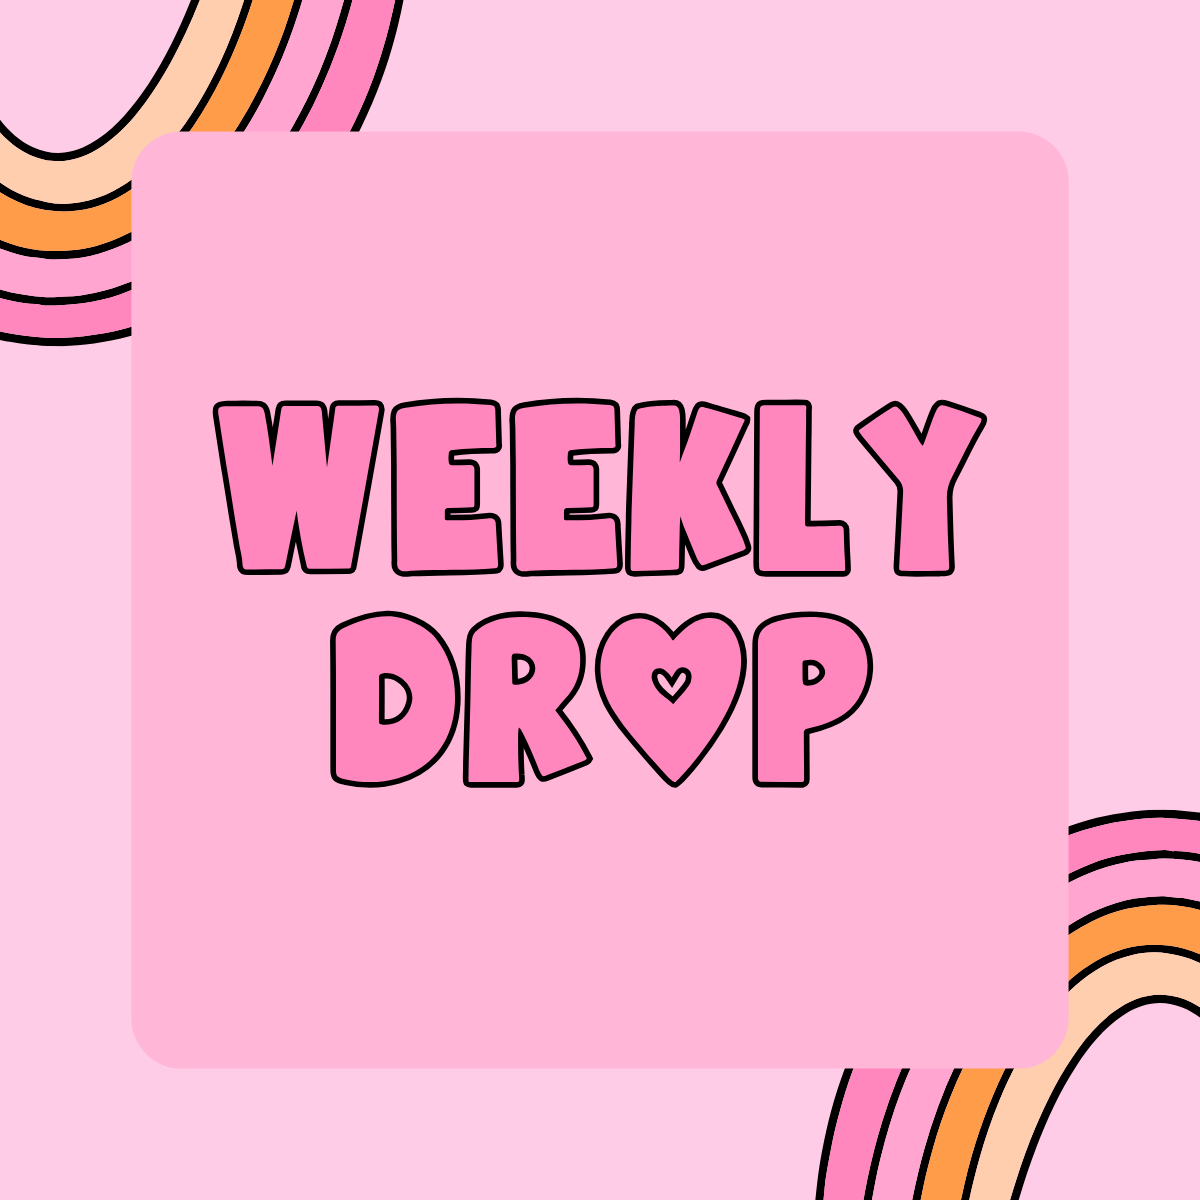 Weekly Drop